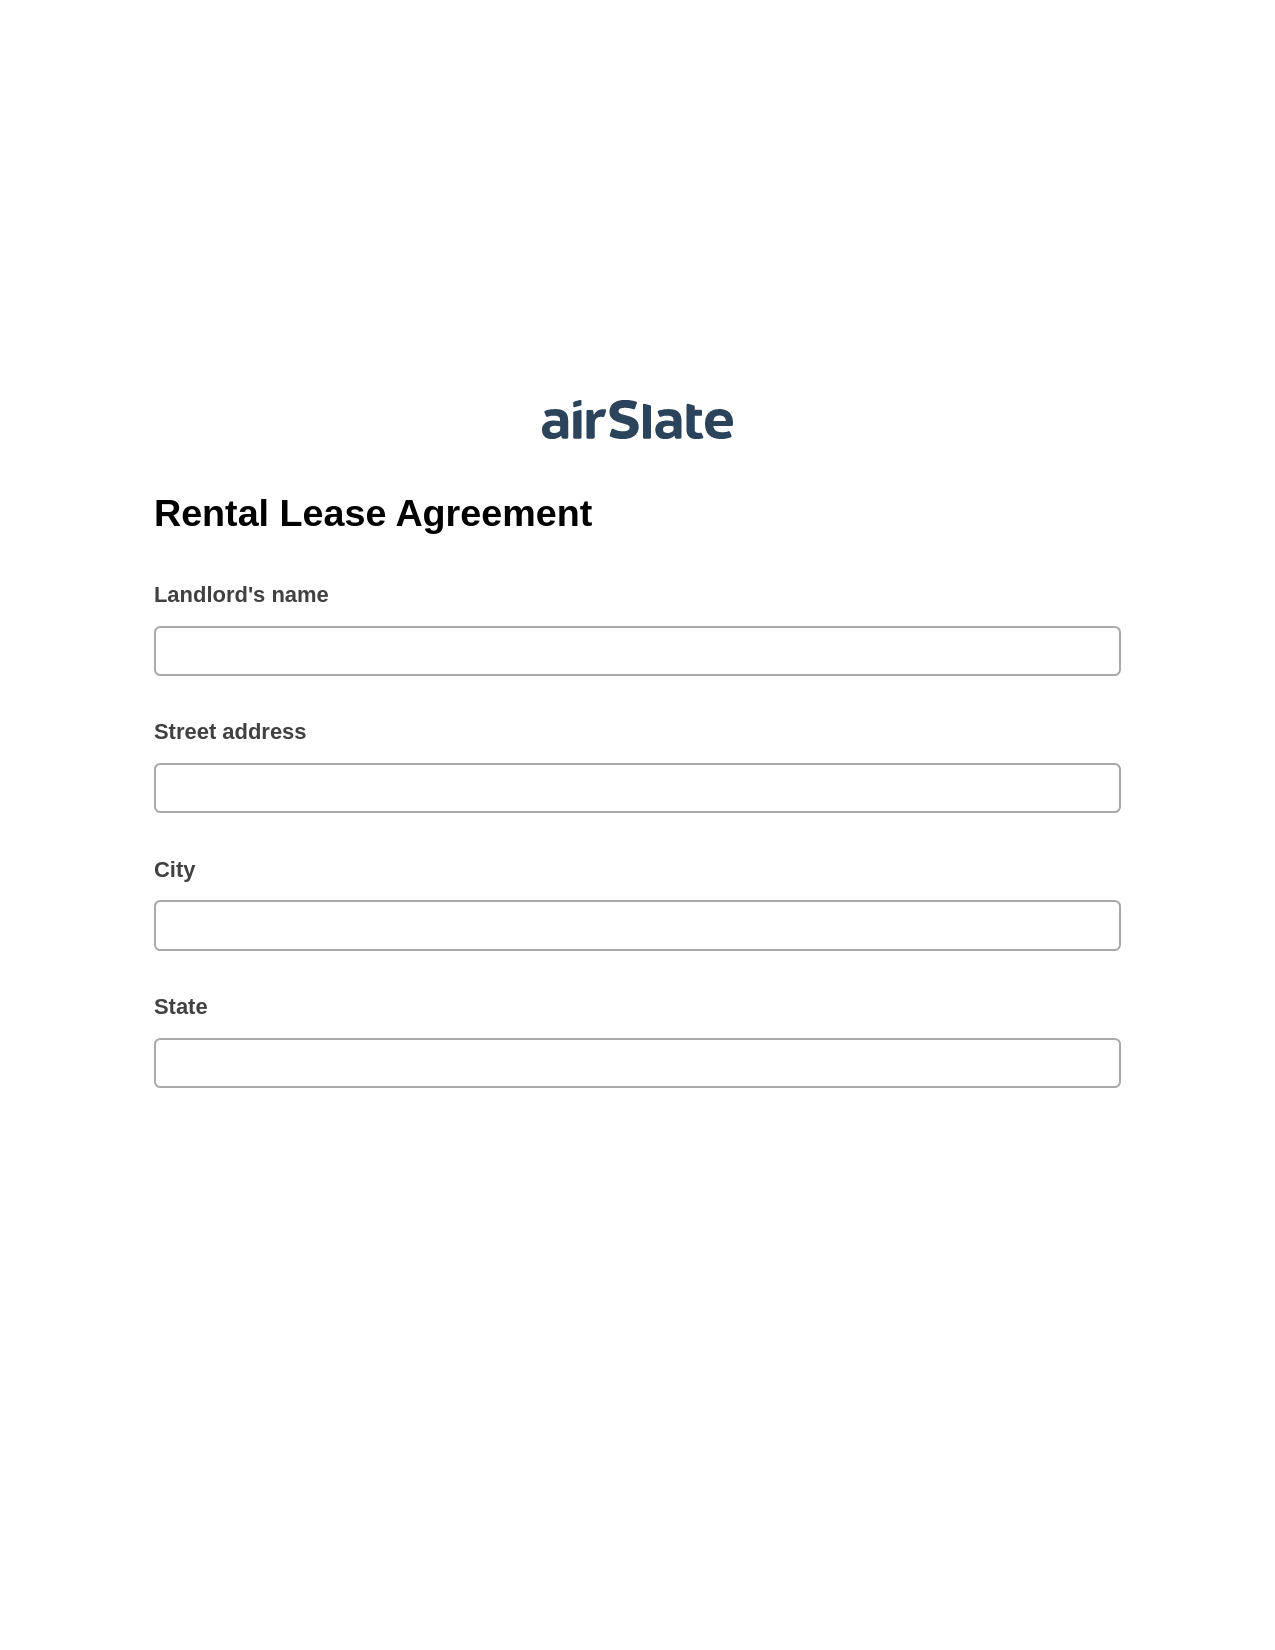 Rental Lease Agreement Pre-fill from MySQL Dropdown Options Bot, Invoke Salesforce Process Bot, Slack Two-Way Binding Bot